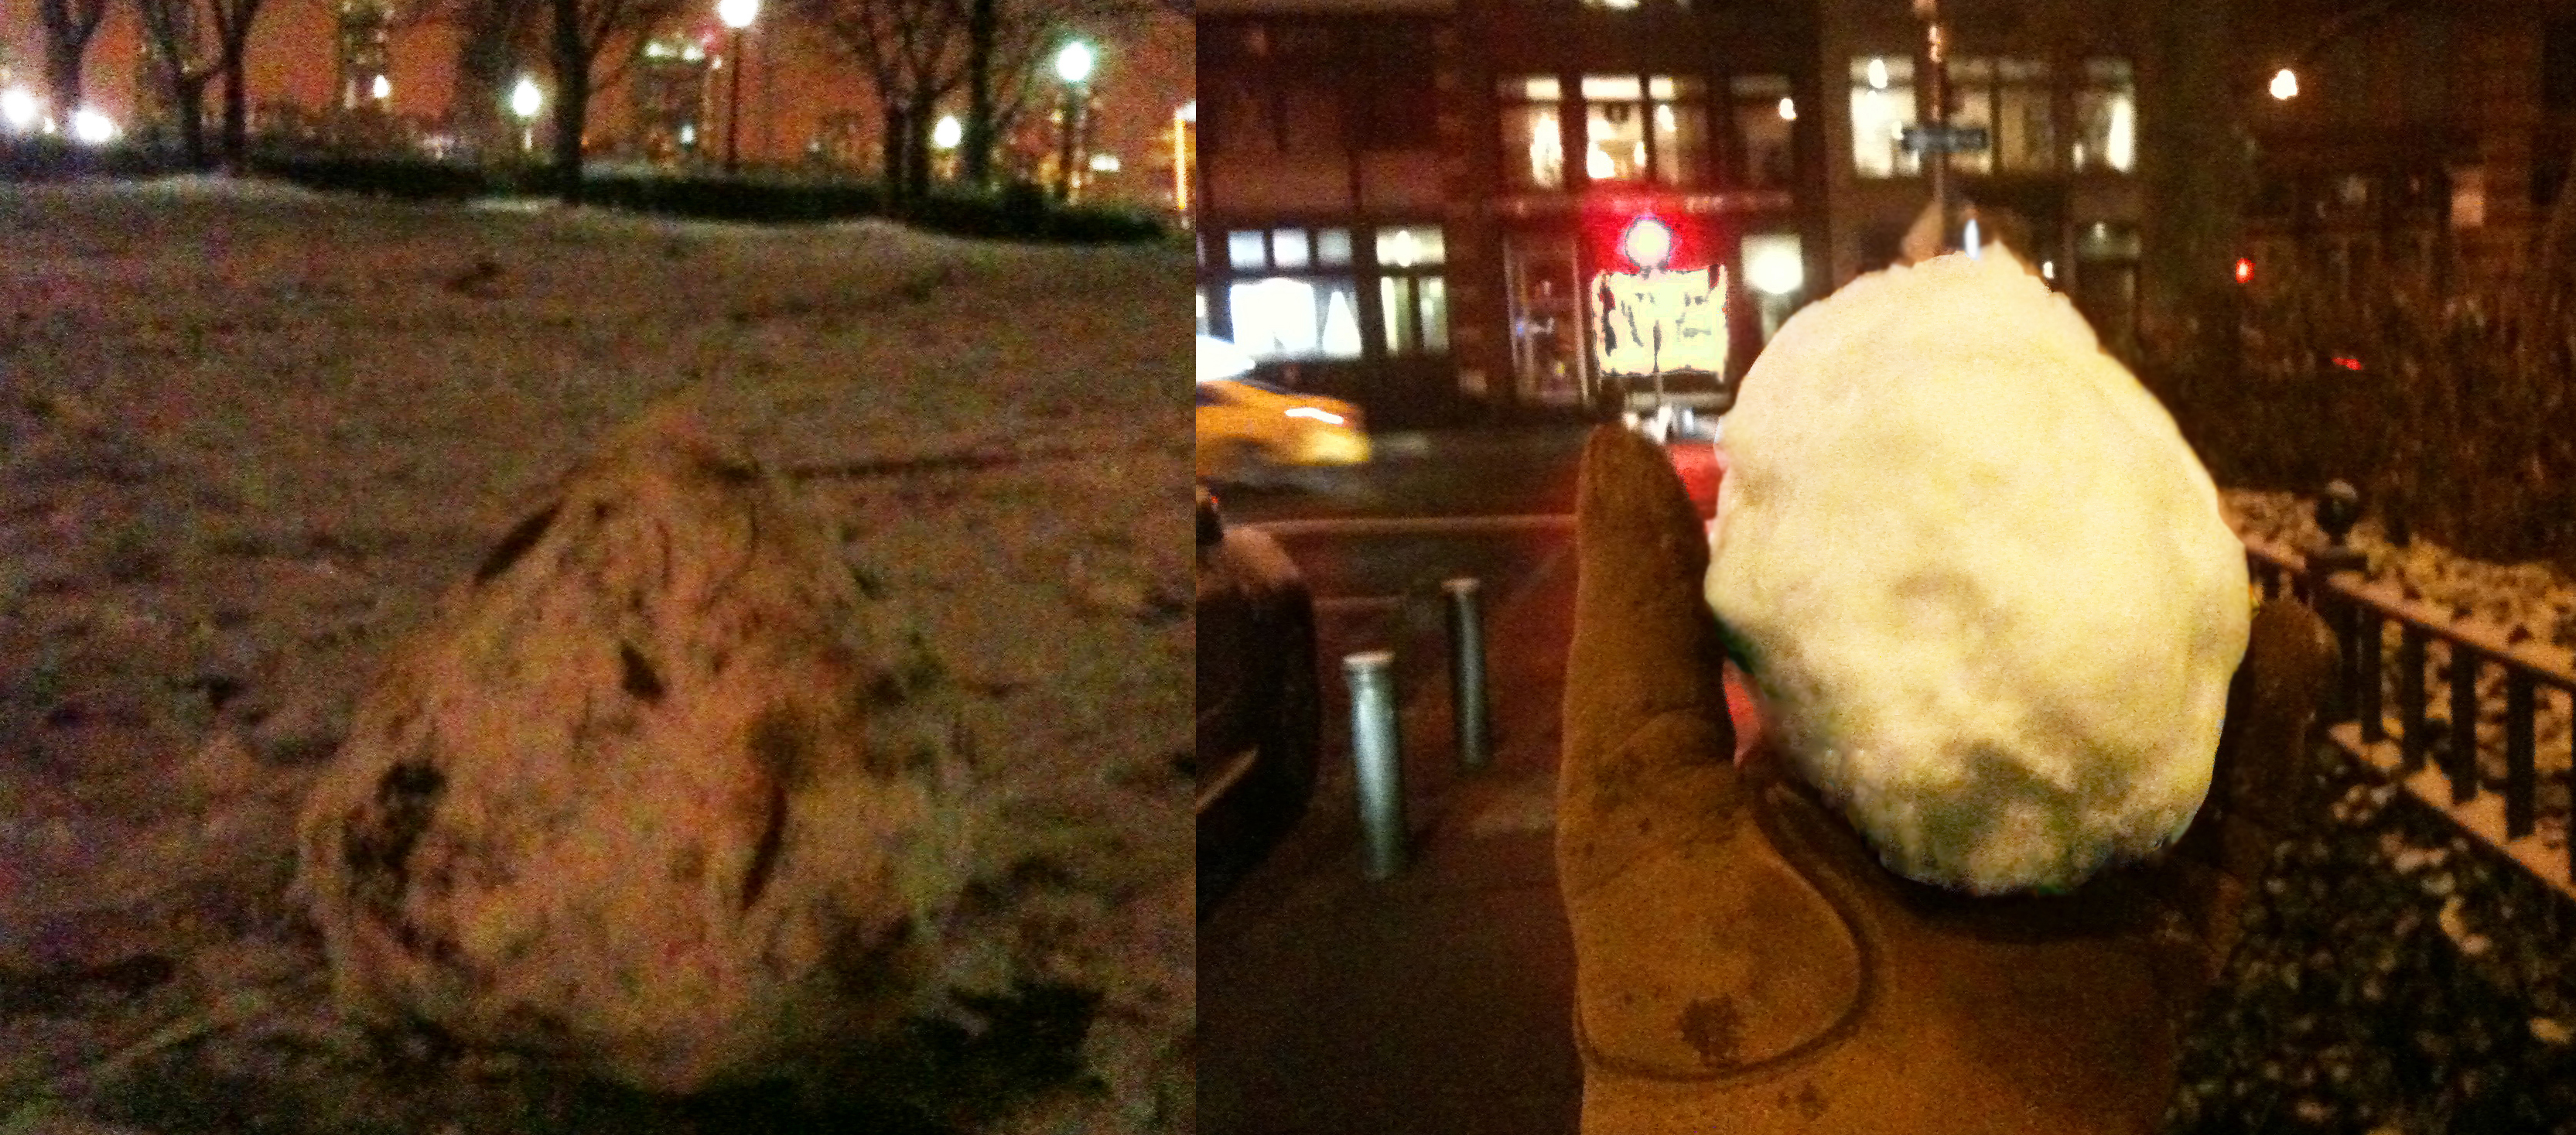 2 snowballs